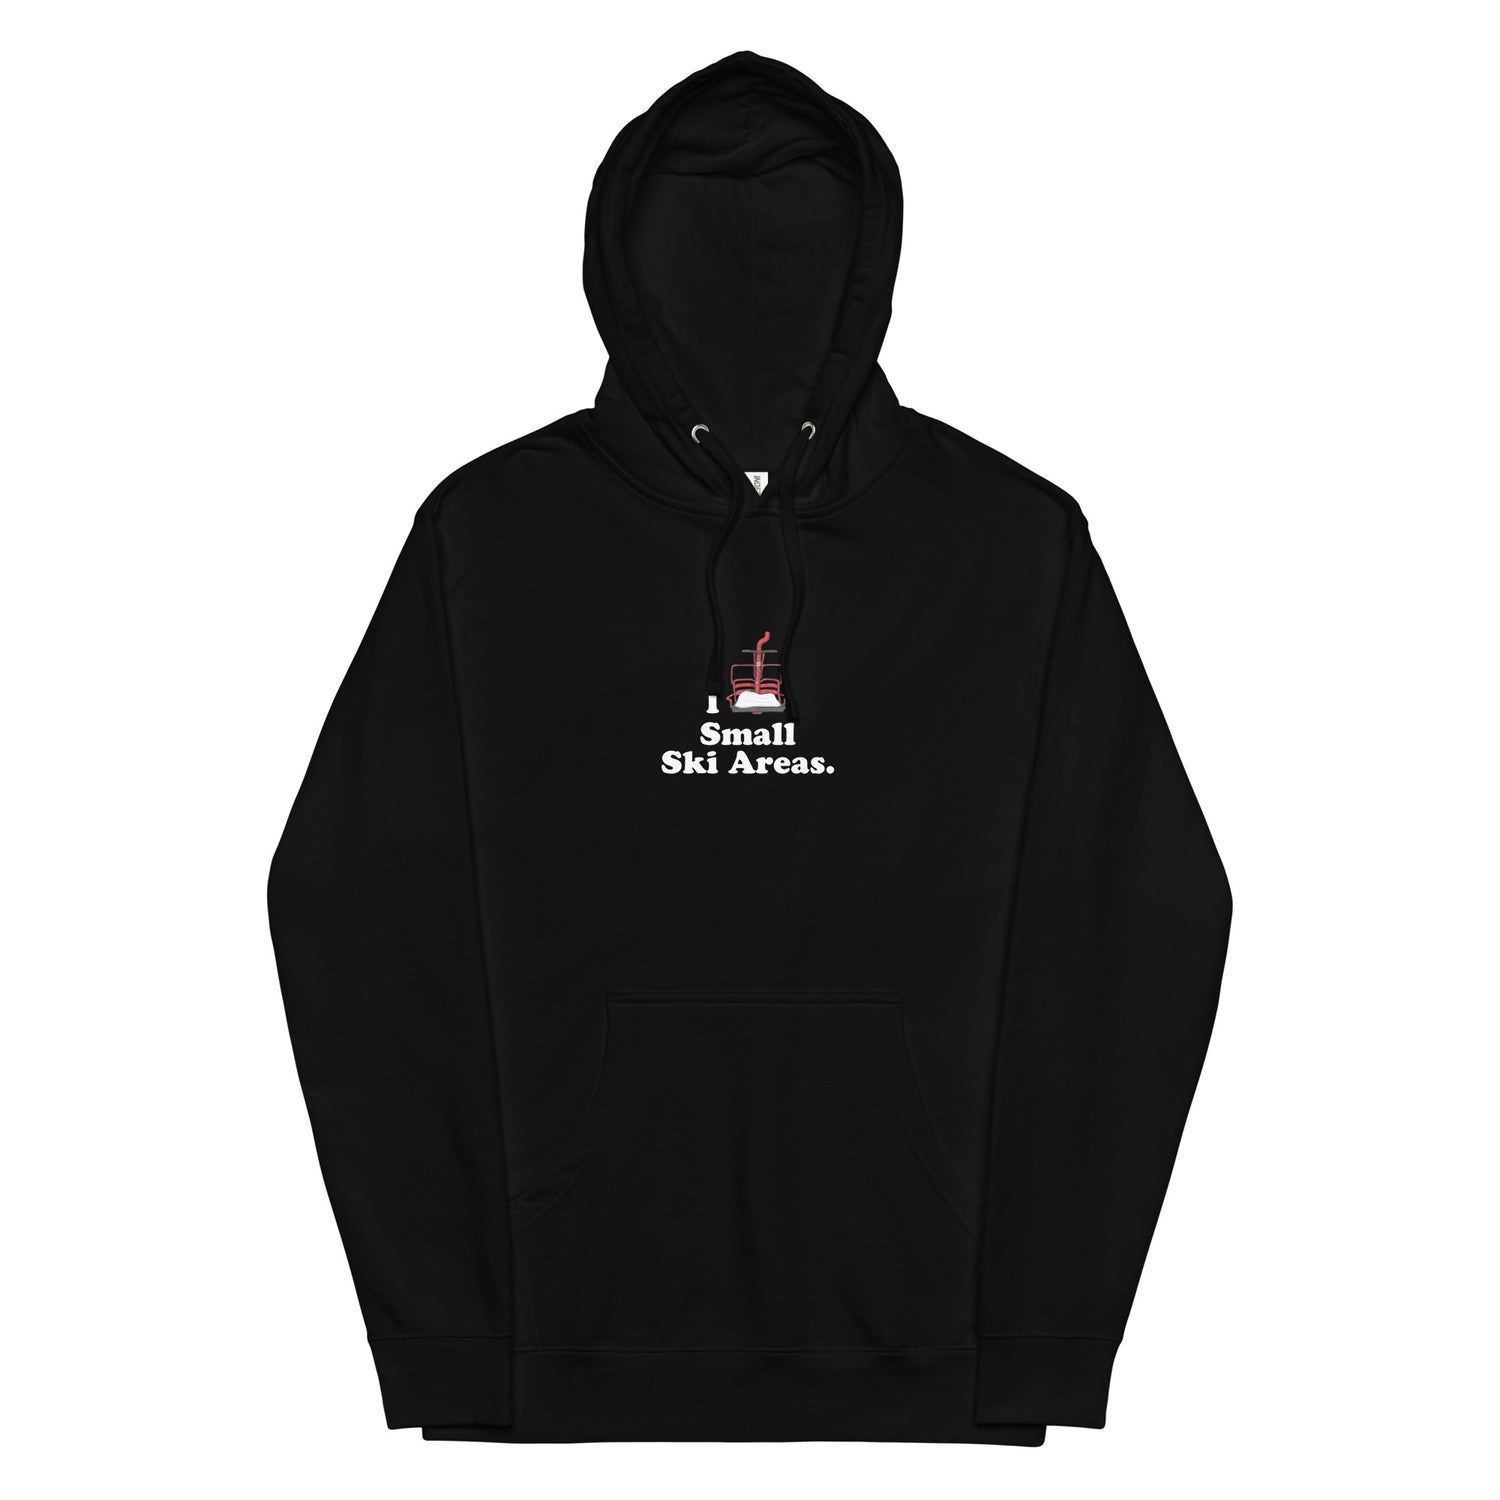 Black unisex hooded sweatshirt with playful ski-themed slogan